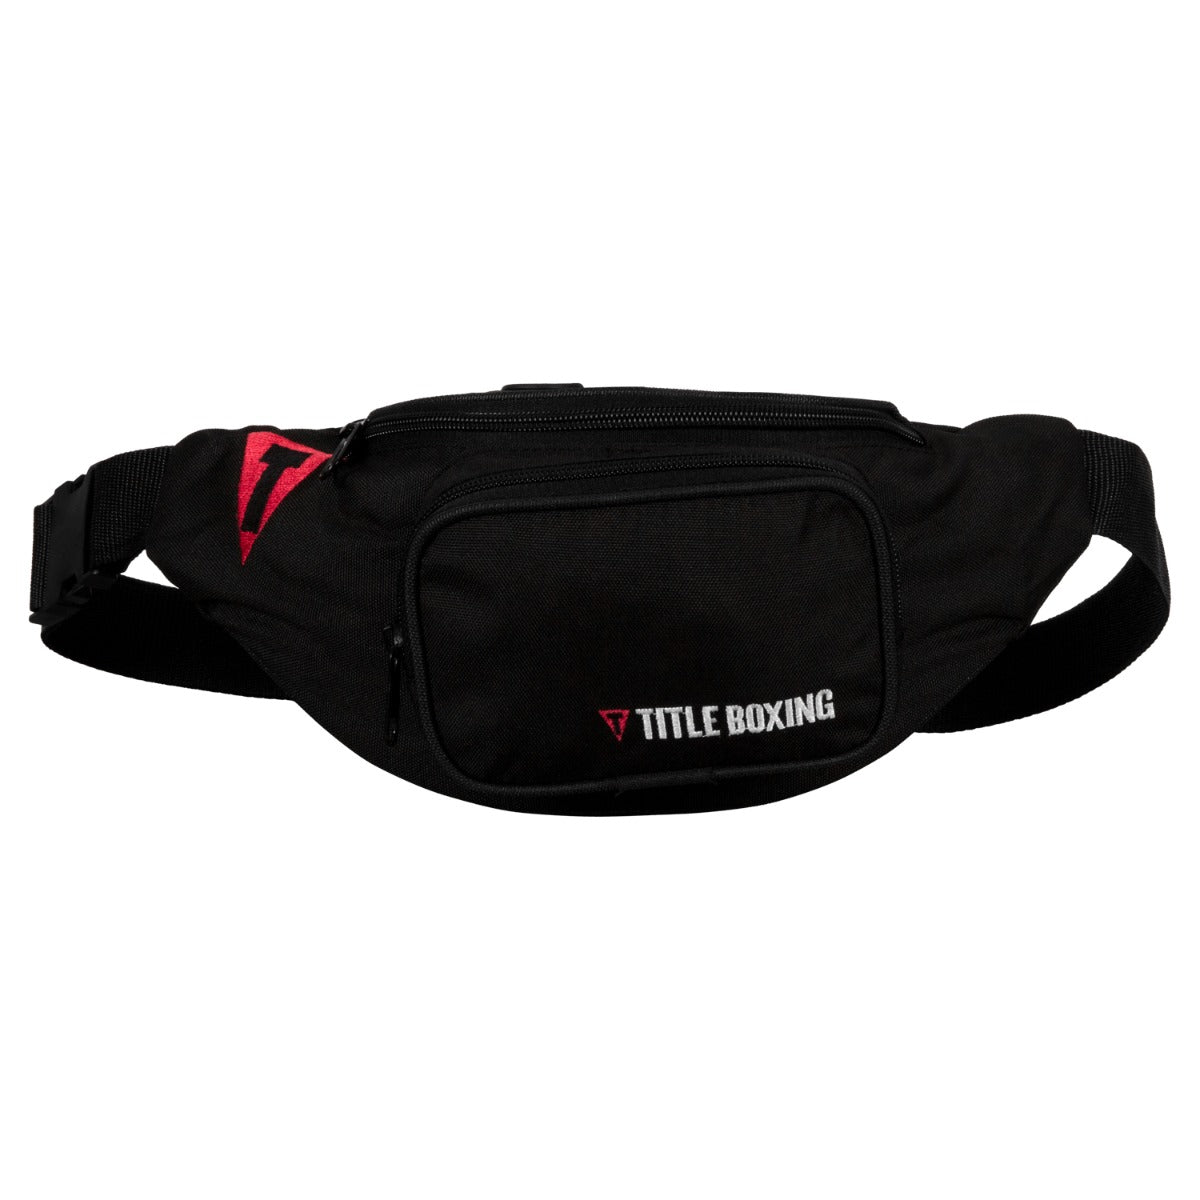 TITLE Boxing Waist Bag